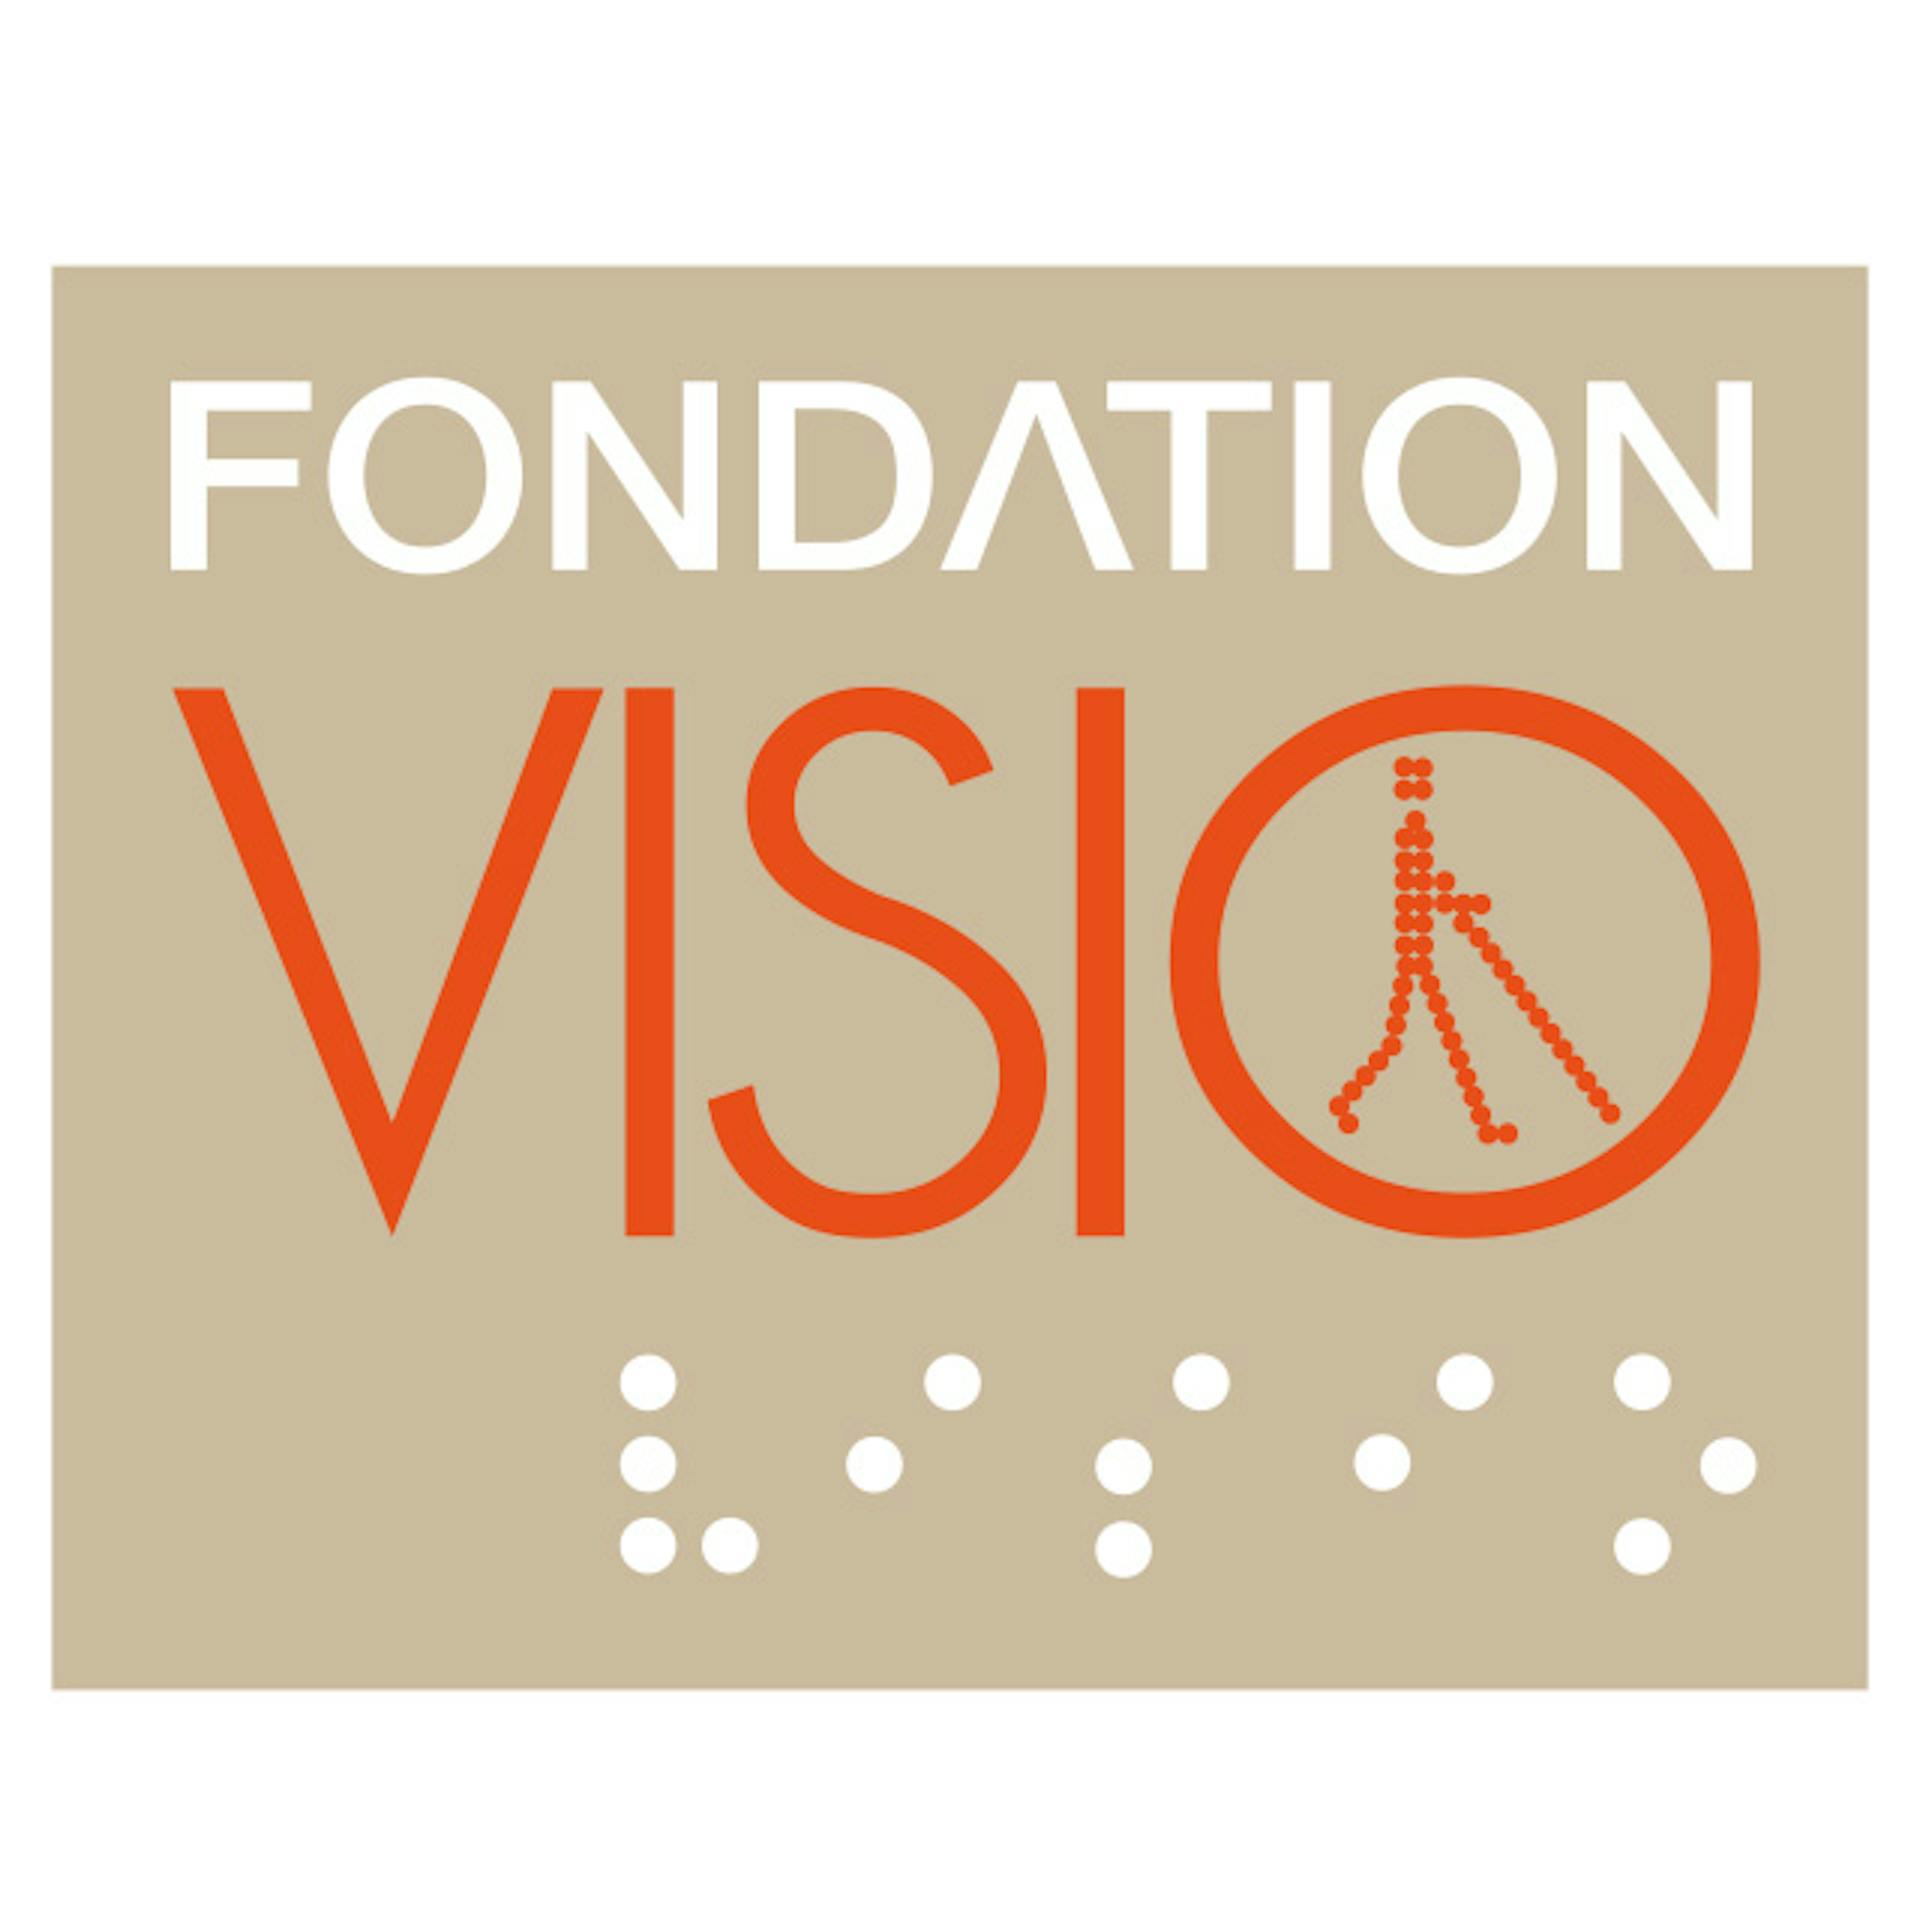 Fondation Visio